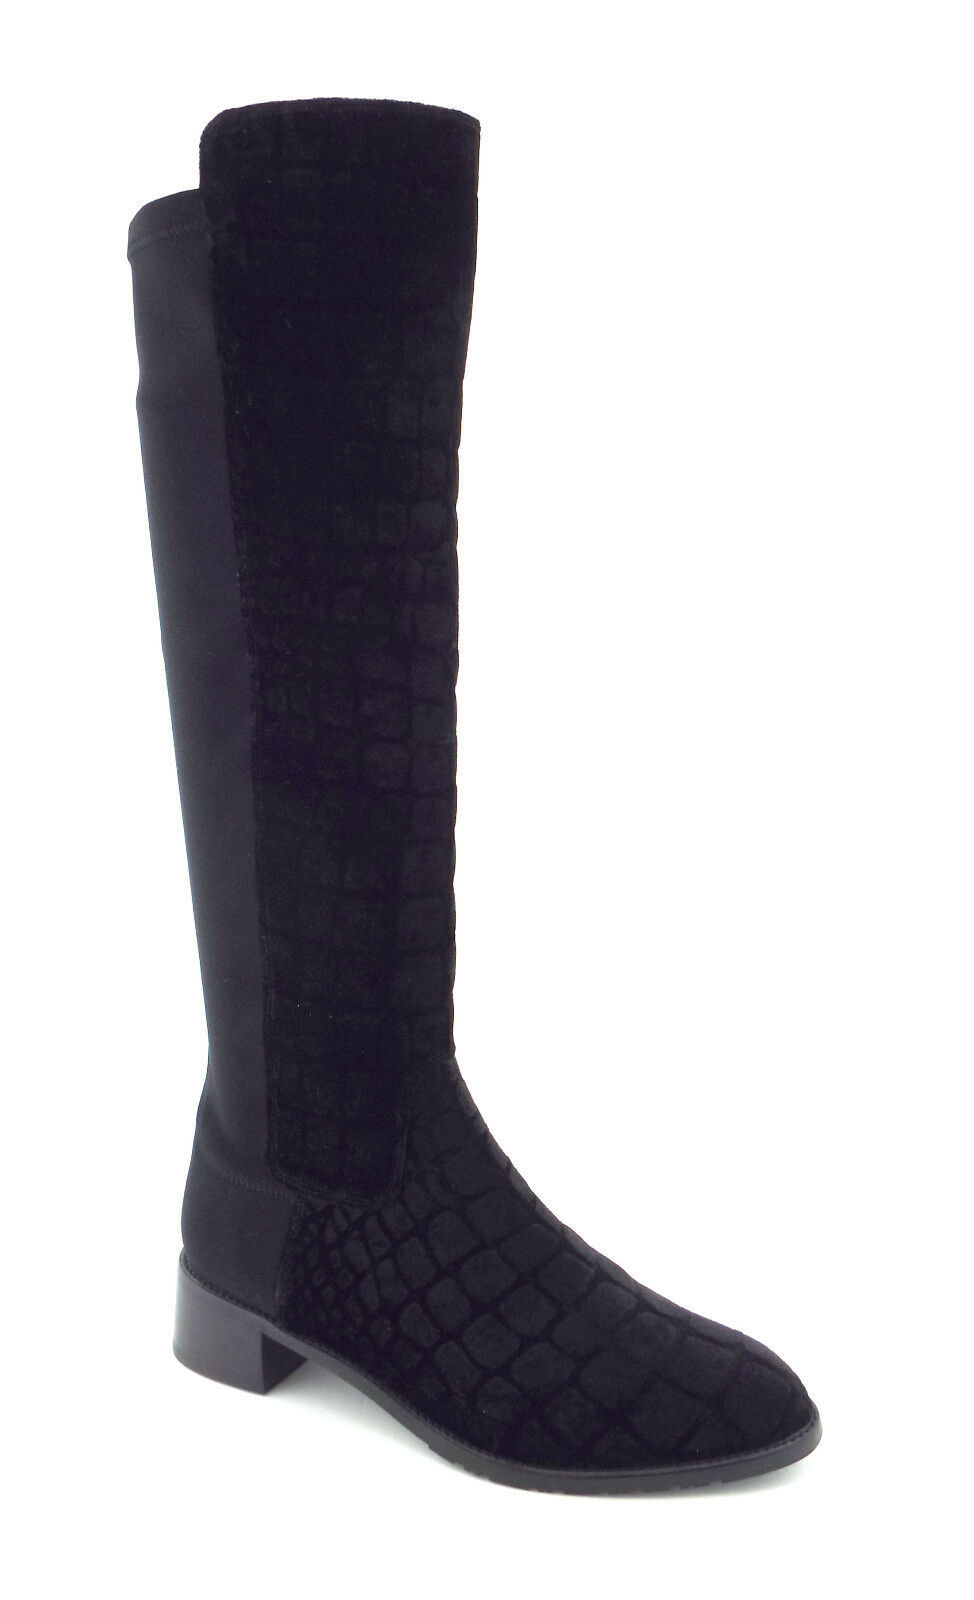 New STUART WEITZMAN Size 8.5 Croc Print Velvet Knee High Tall Boots 8 1/2 - $368.00